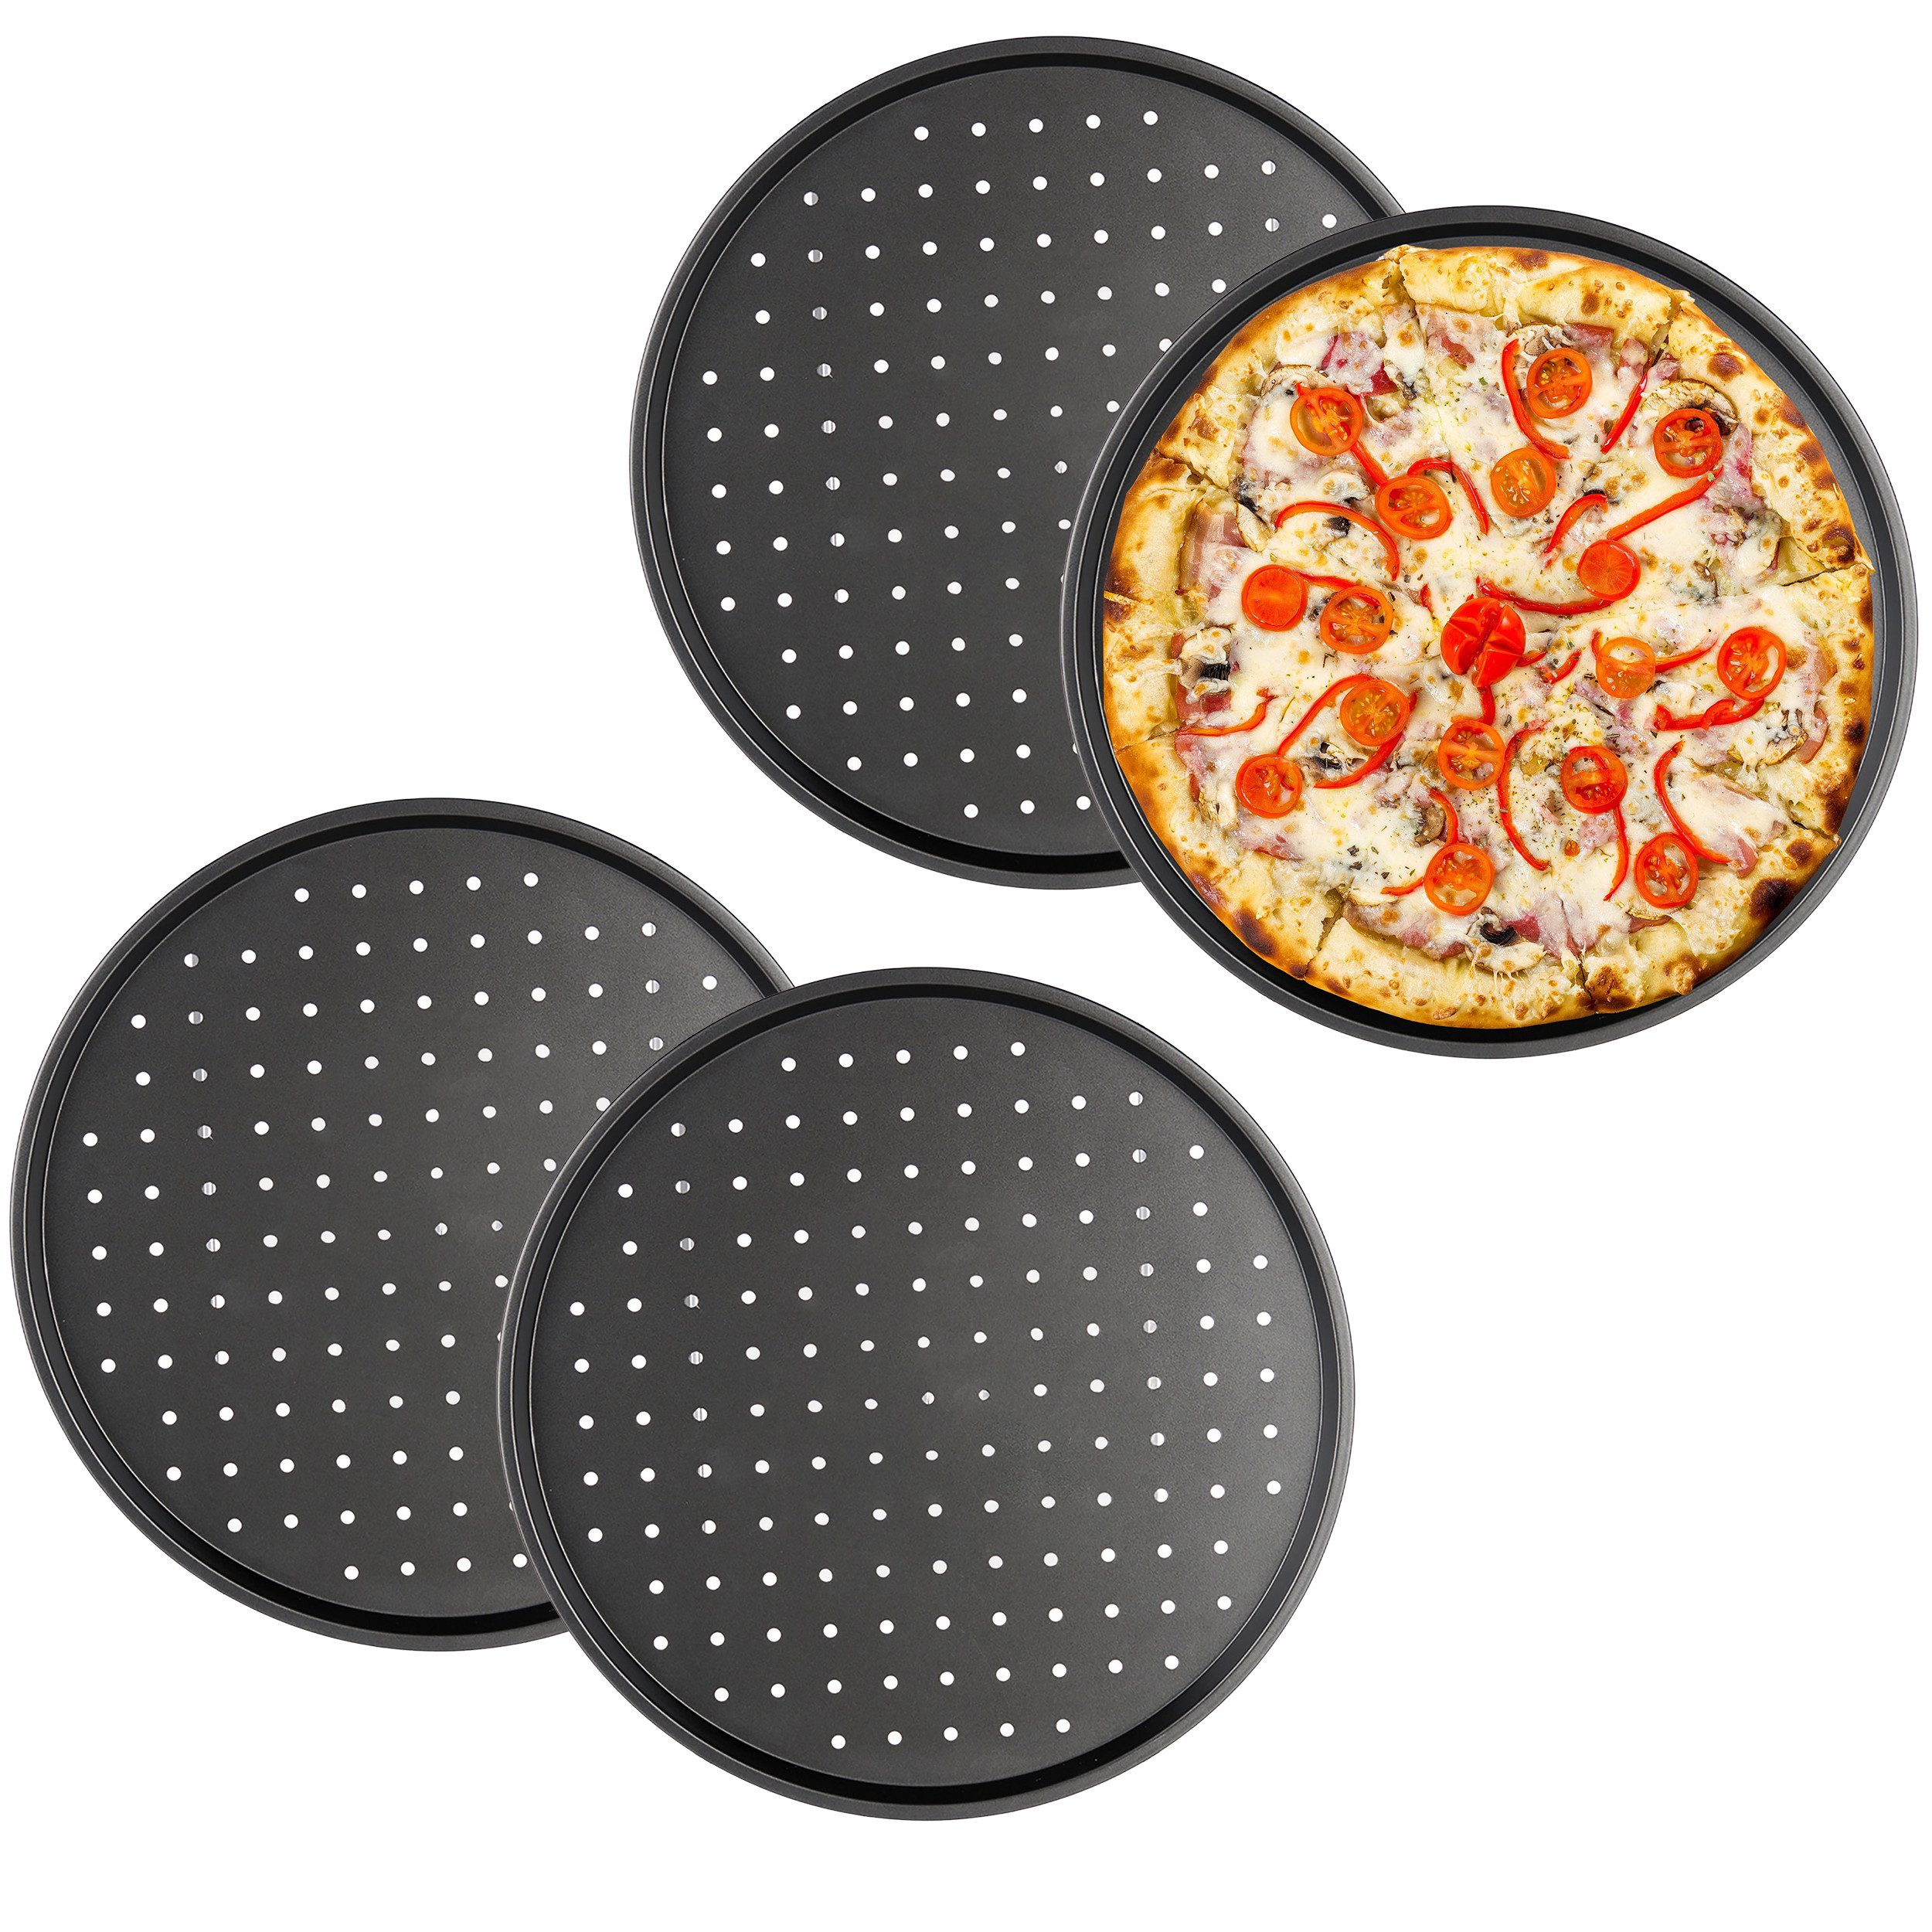 Annastore Pizzablech aus Carbonstahl mit Löchern antihaftbeschichtet - Backblech für Pizza, (4-St), Ø 33 cm